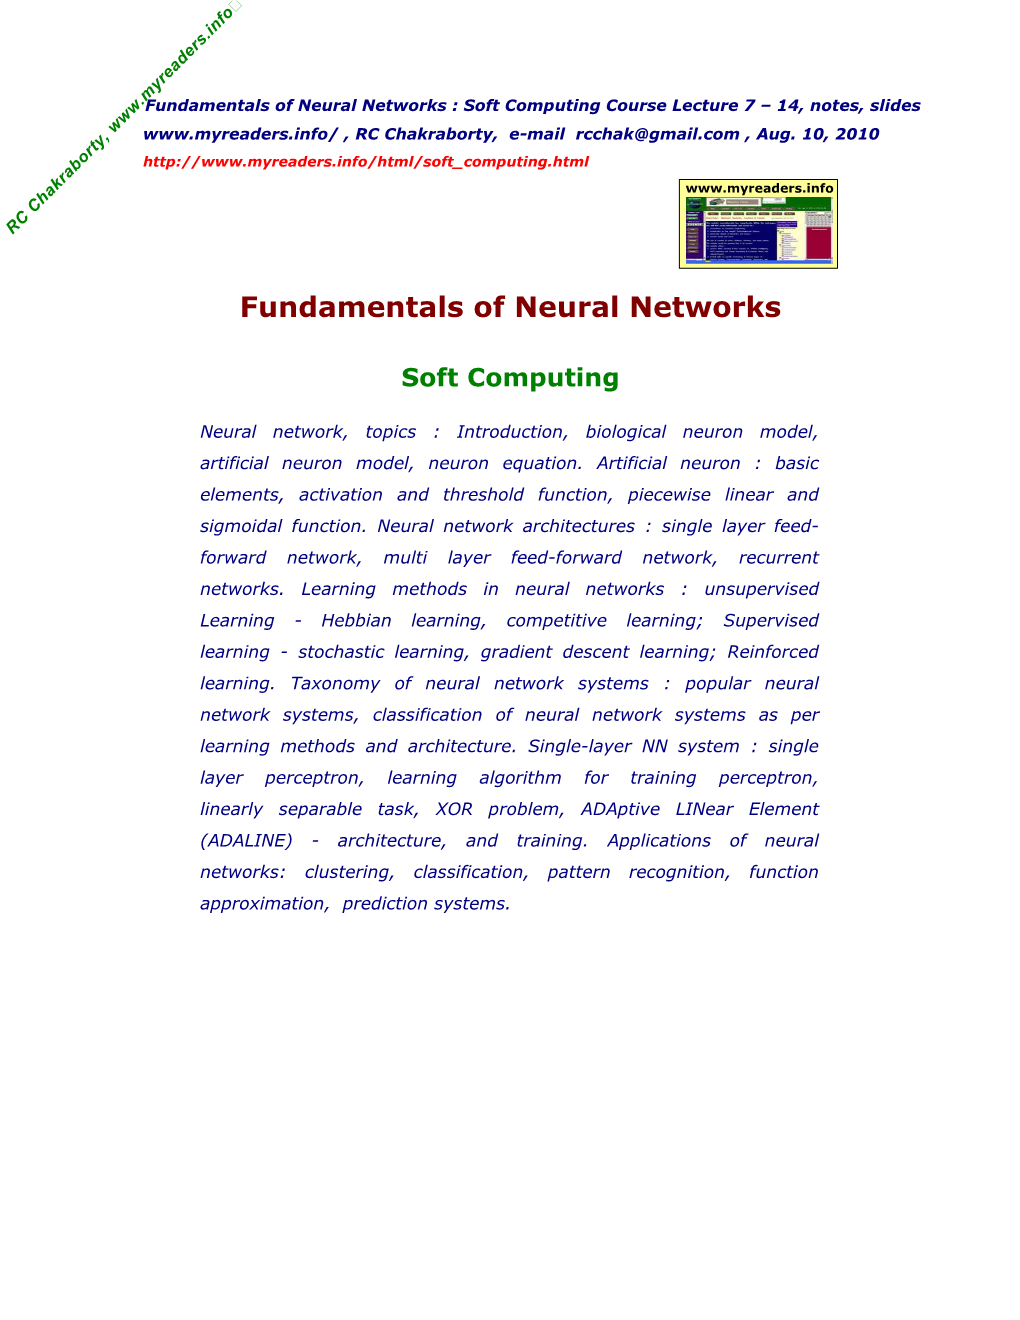 Neural Networks : Soft Computing Course Lecture 7 – 14, Notes, Slides , RC Chakraborty, E-Mail Rcchak@Gmail.Com , Aug